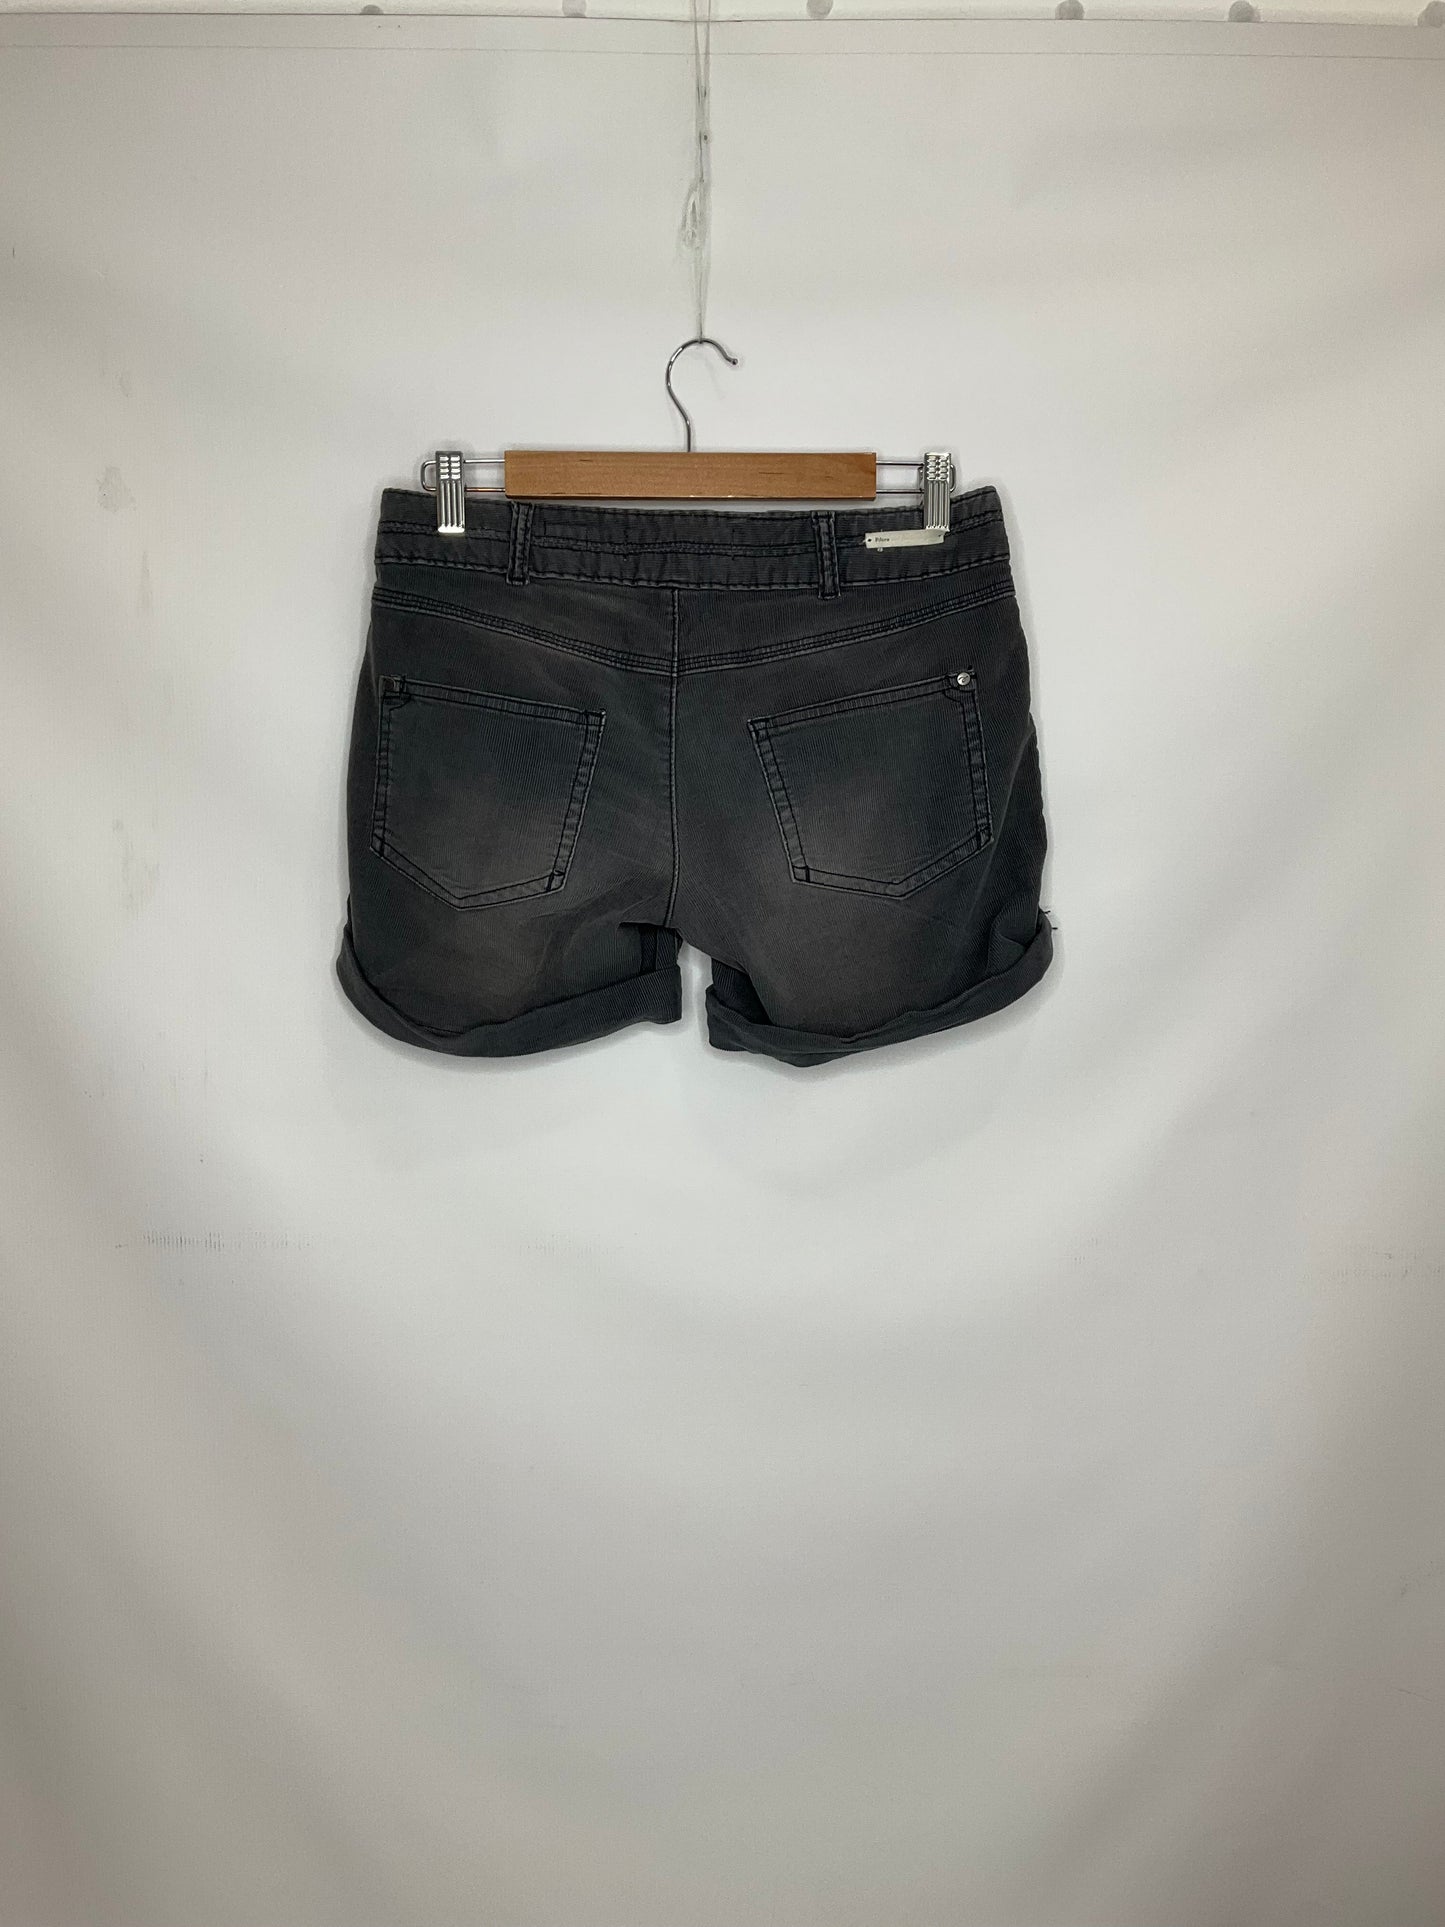 Grey Shorts Pilcro, Size 2